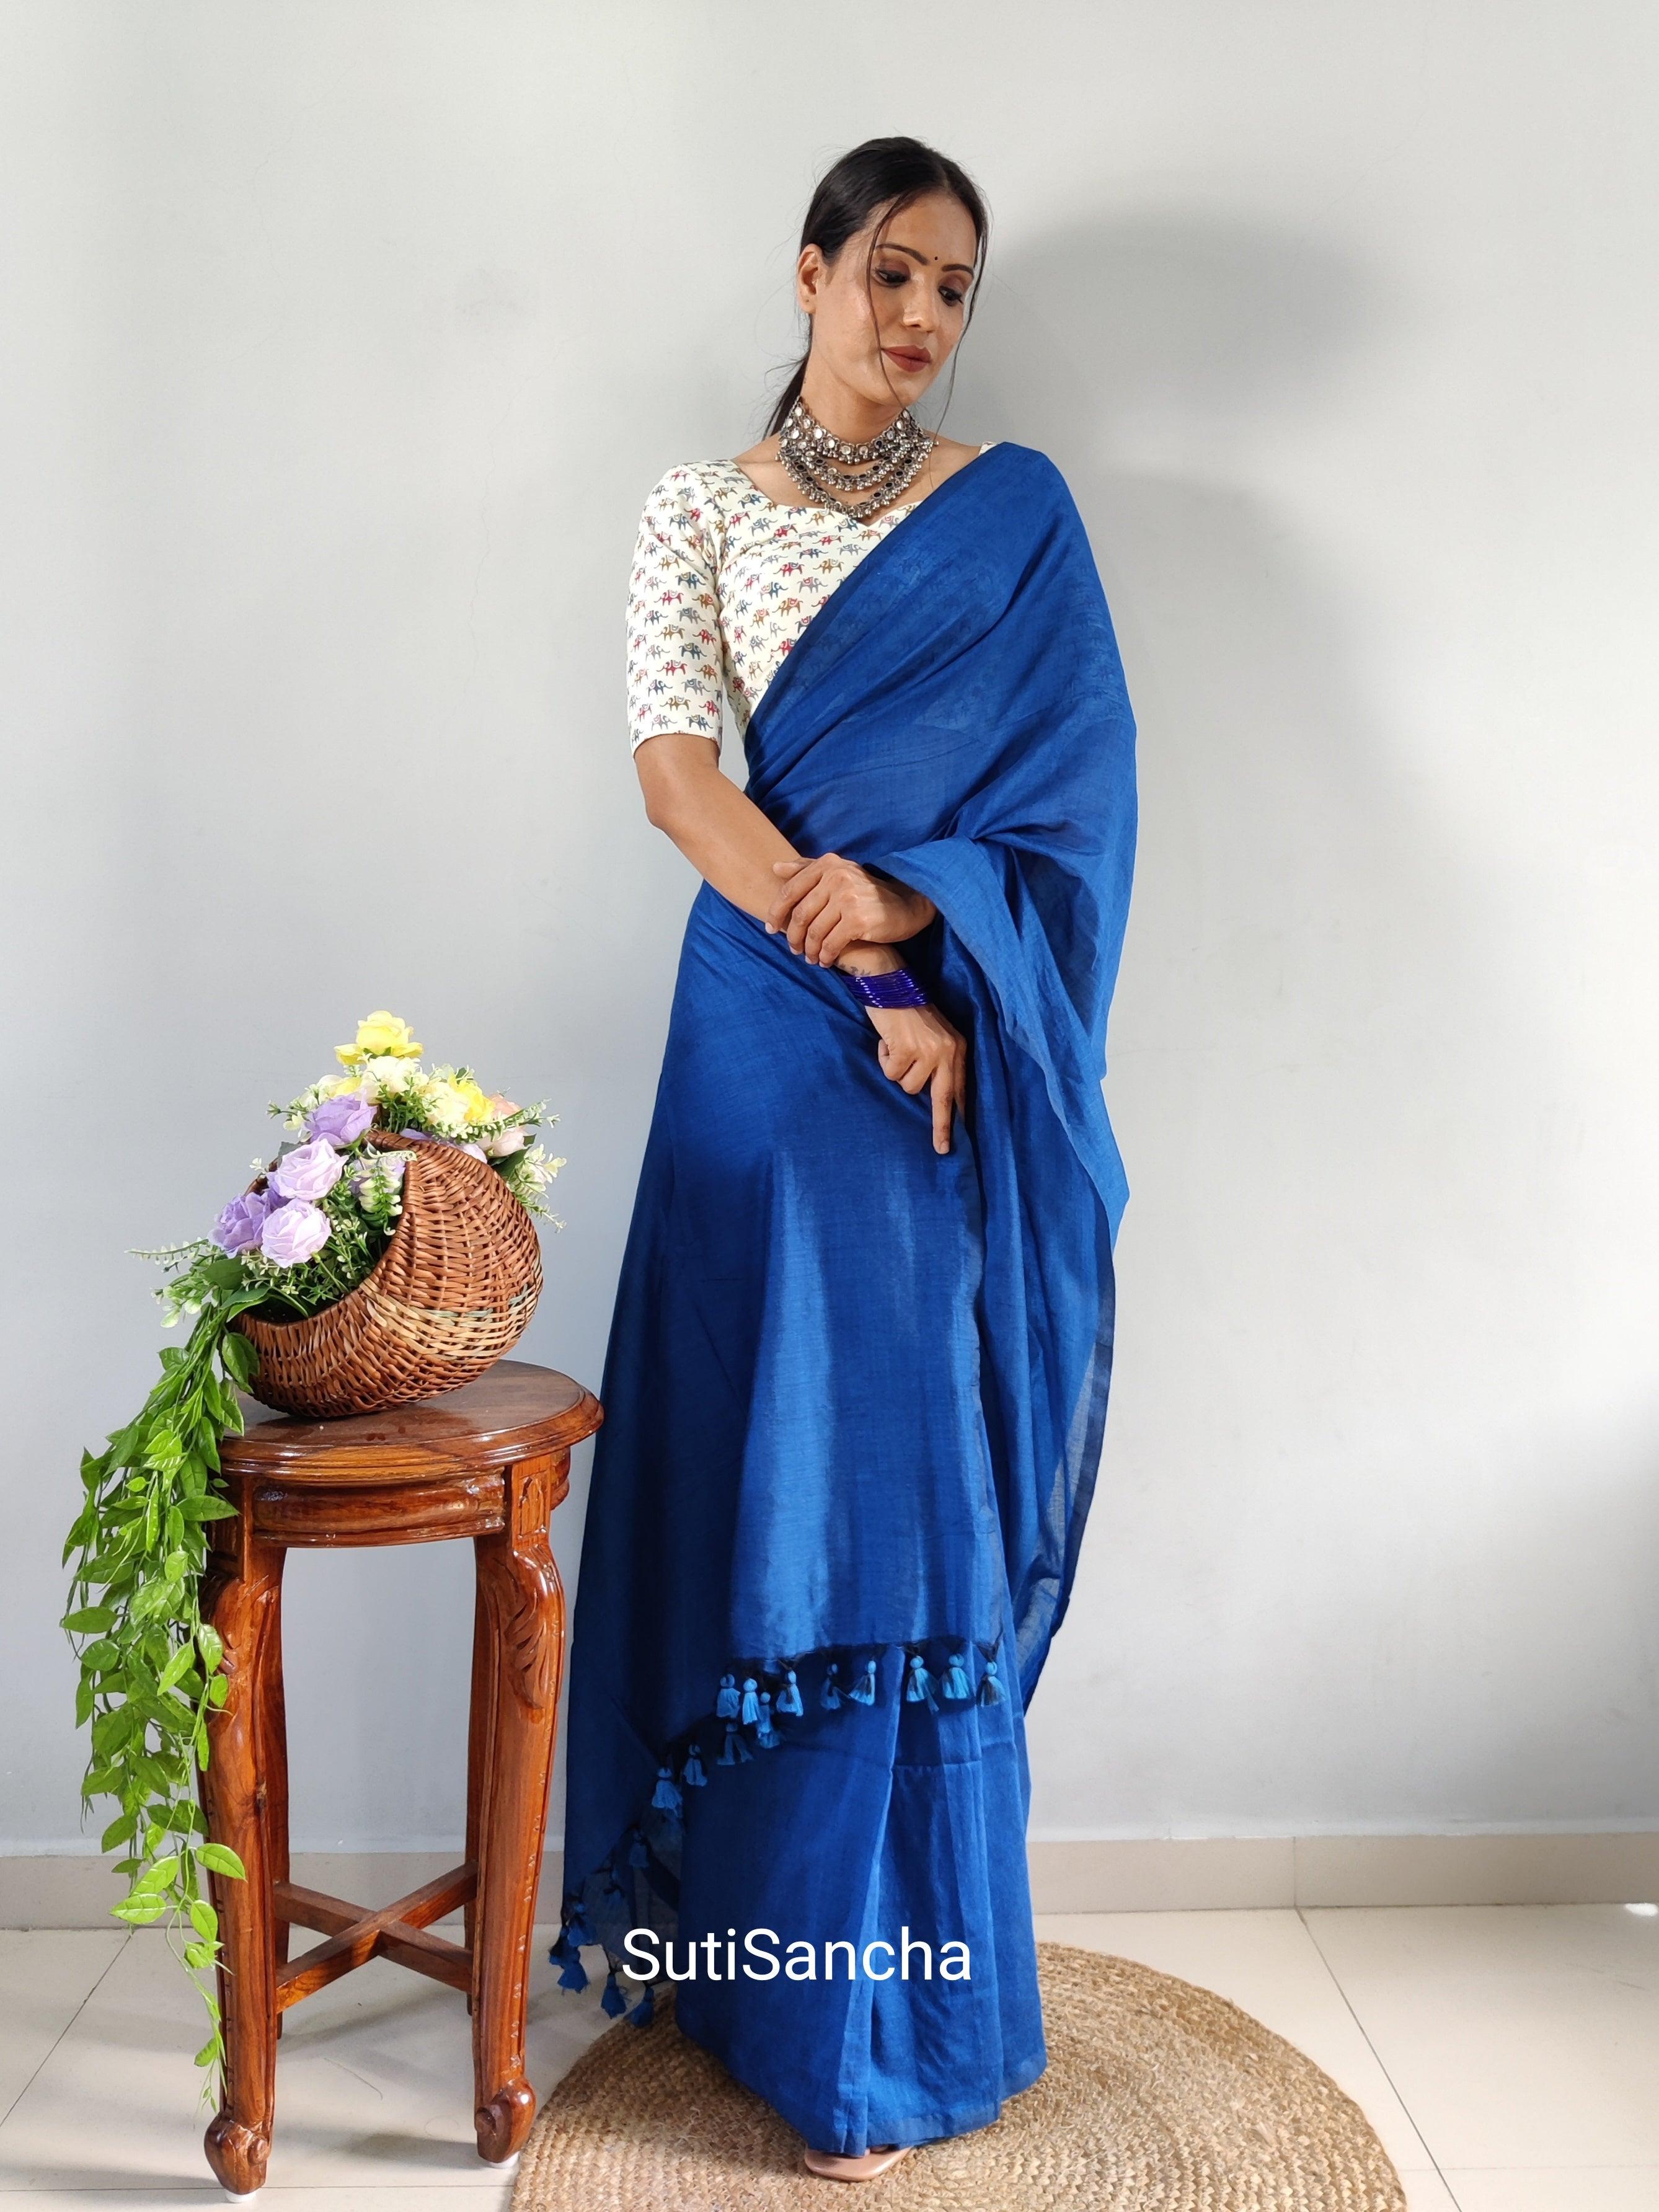 Sutisancha Indigoblue Khadi Saree & designer Blouse - Suti Sancha